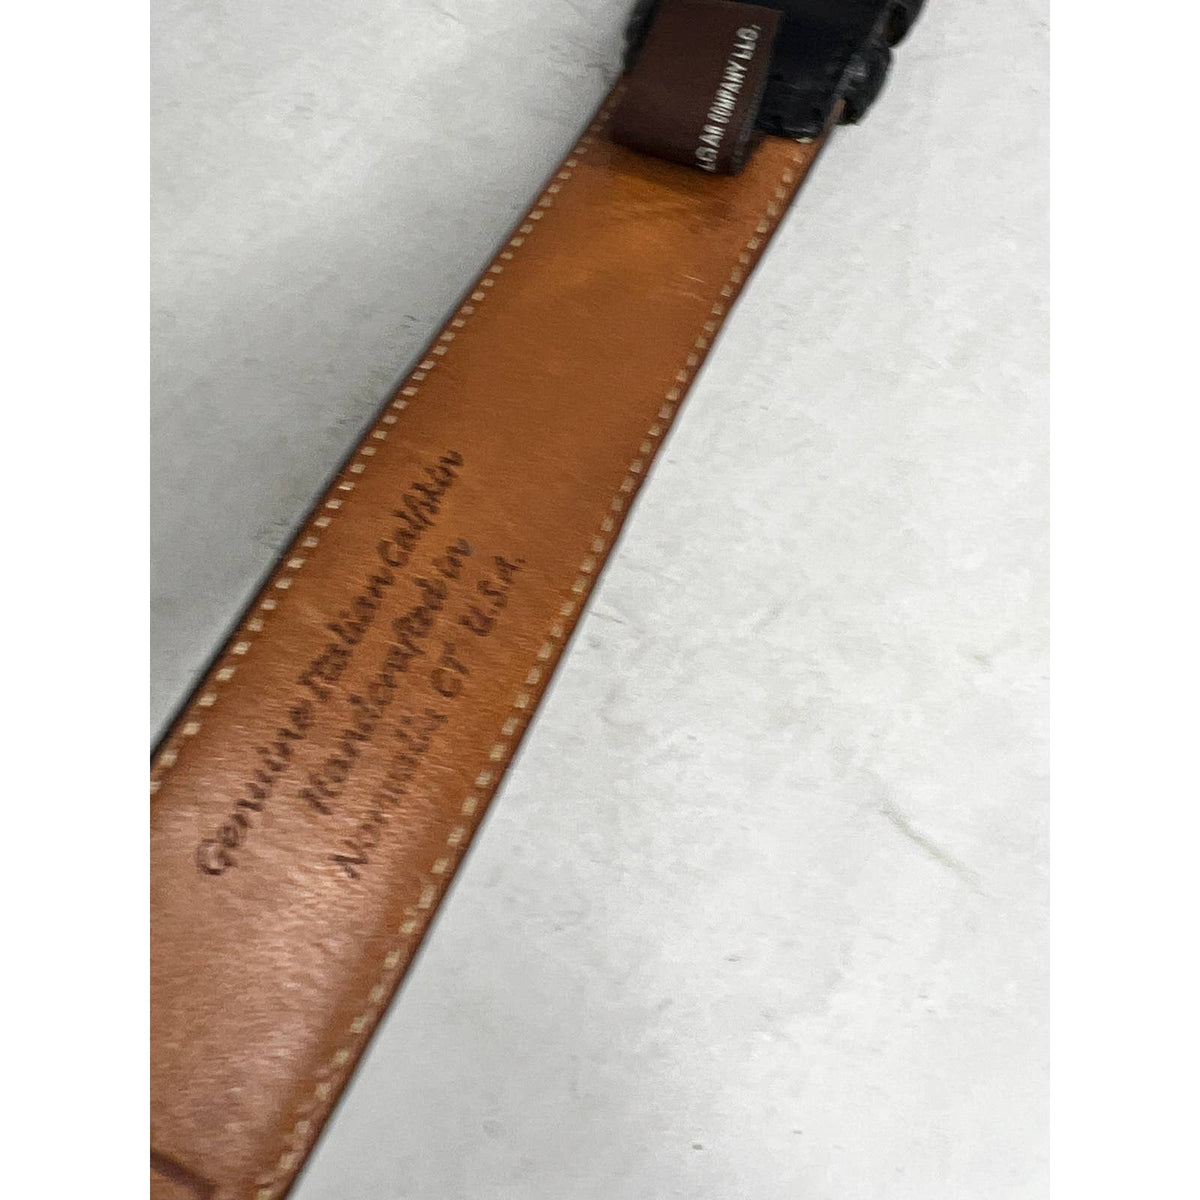 Trafalgar Black Leather Genuine Italian Calfskin Belt Sz.40/100